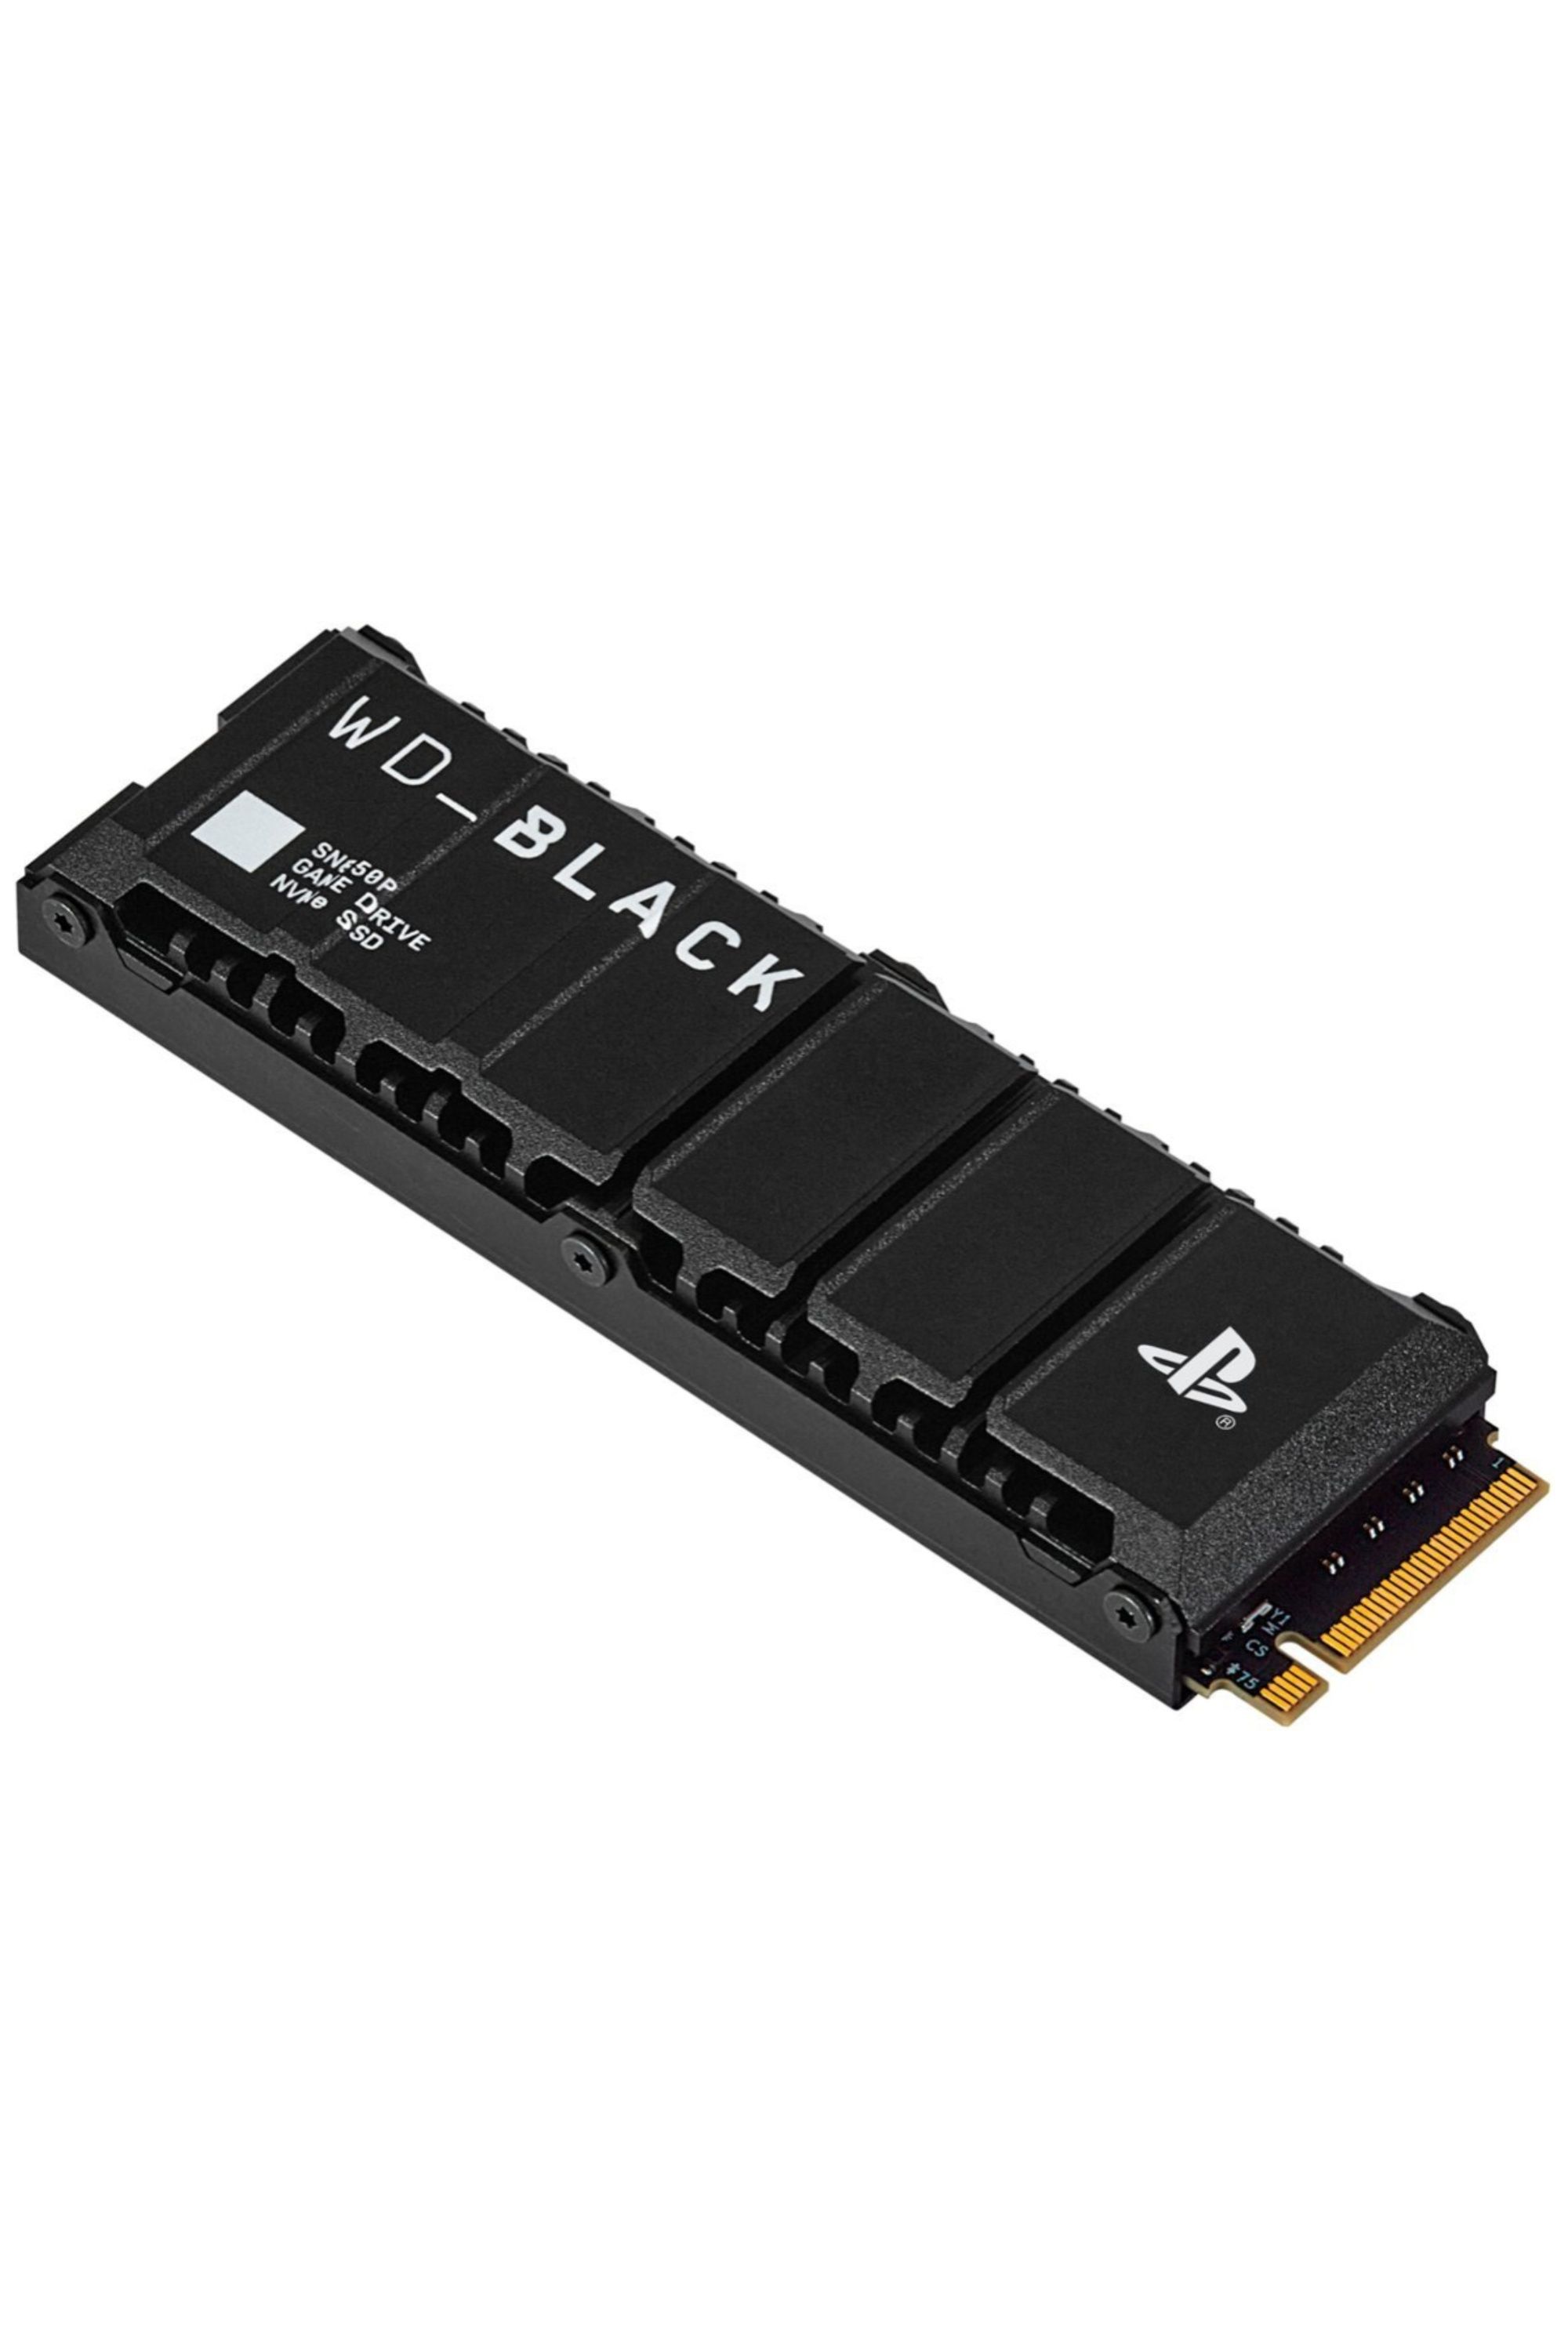 WD - BLACK SN850P 2TB Internal SSD PCIe Gen 4 x4 with Heatsink for PS5